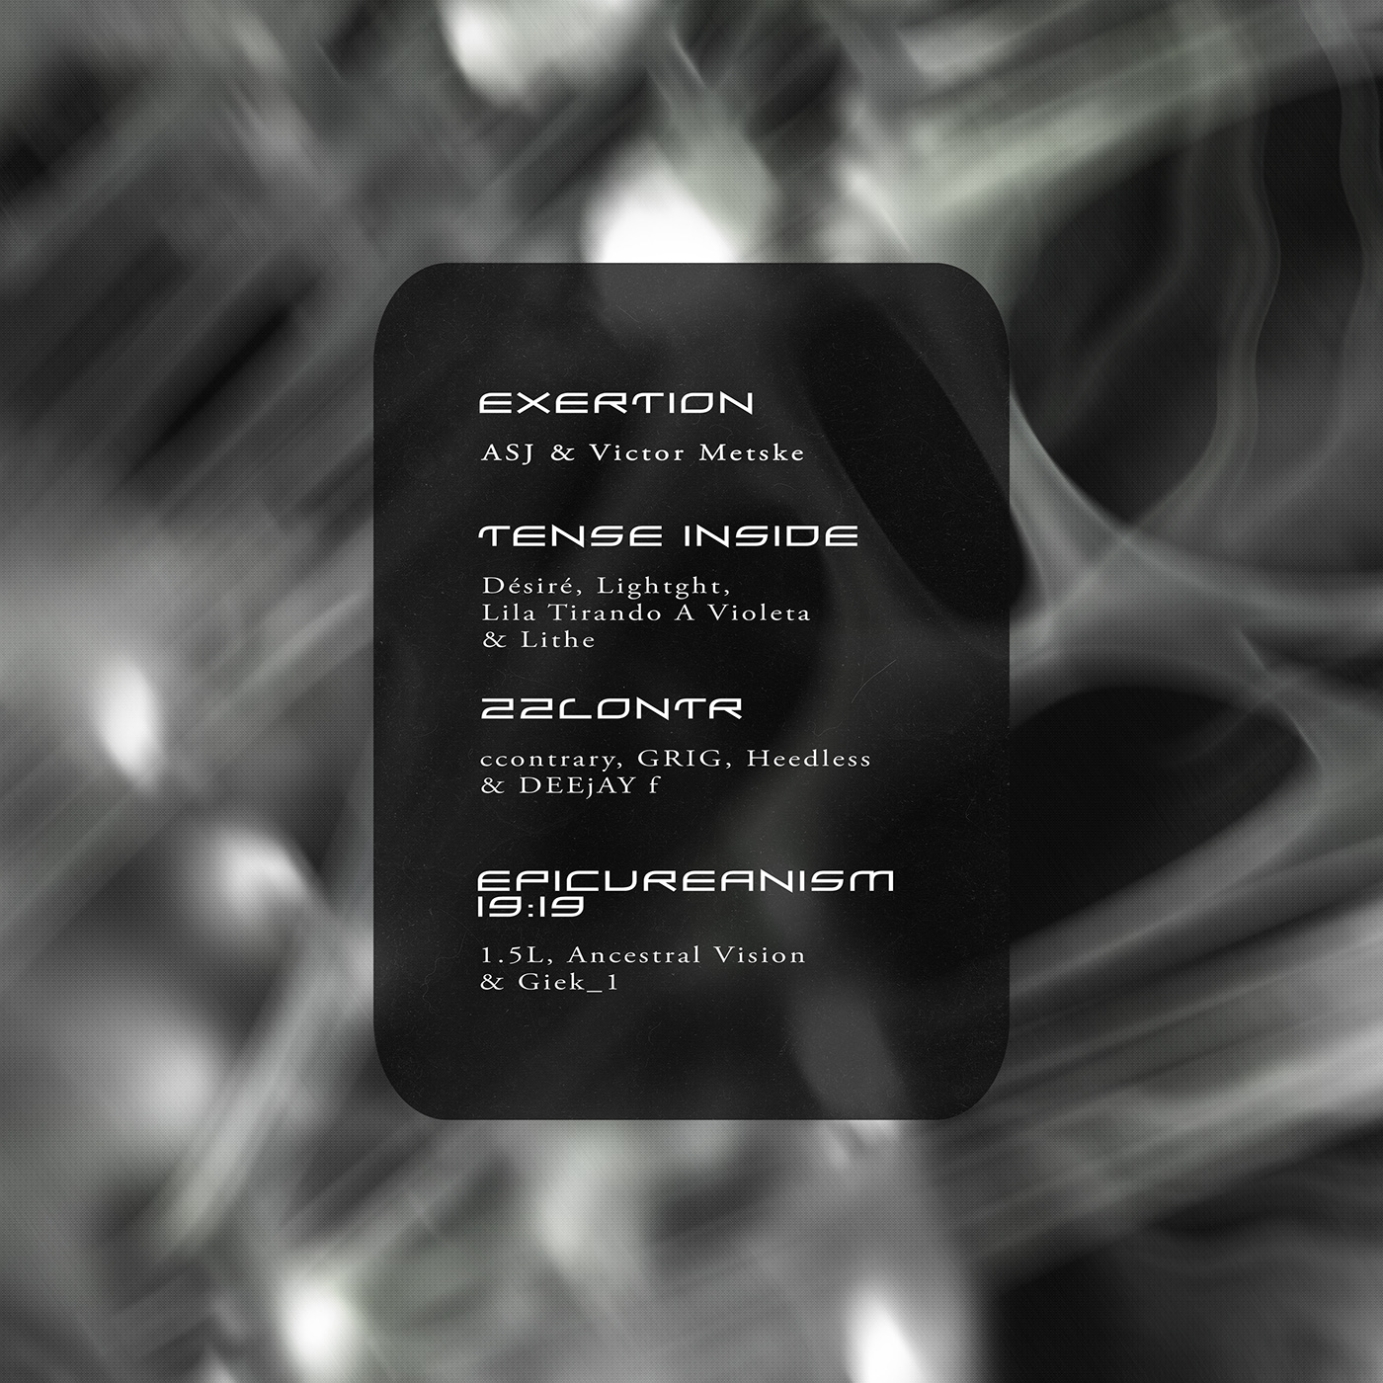 CLM x GUN: Emergence (promotional material & Artwork)